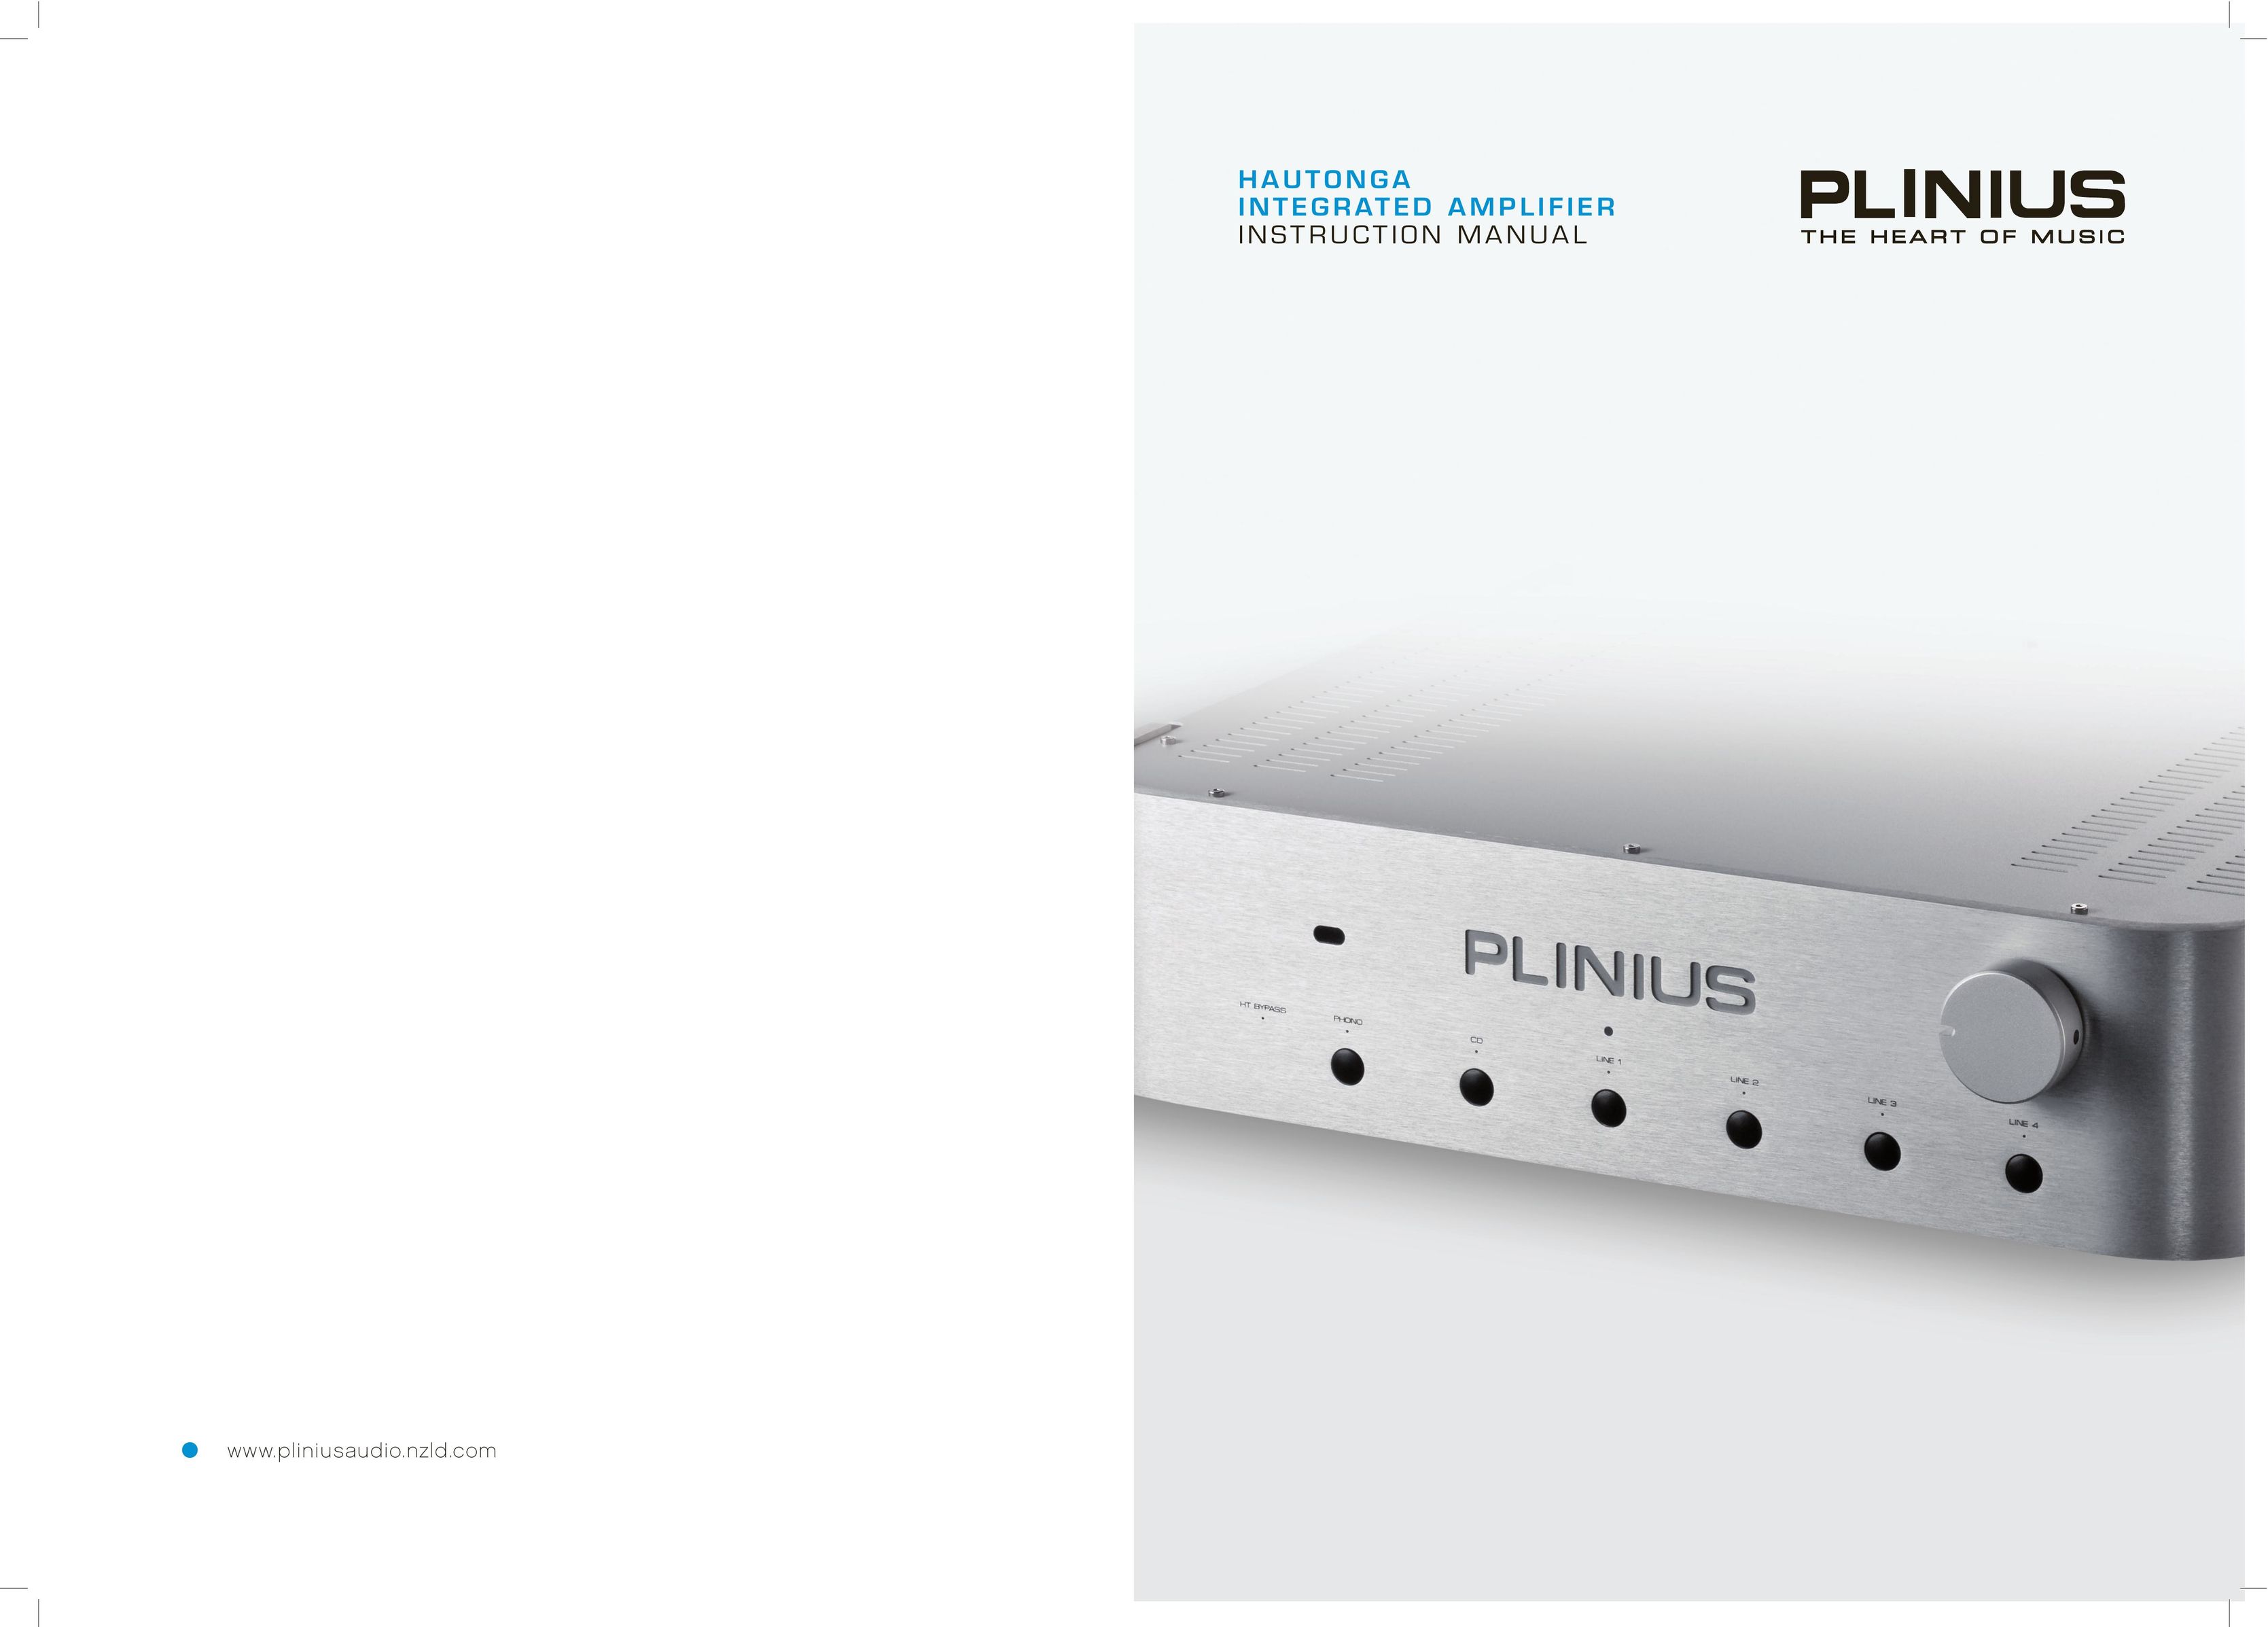 Plinius Audio Hautonga Intergrated Amplifier Stereo Amplifier User Manual